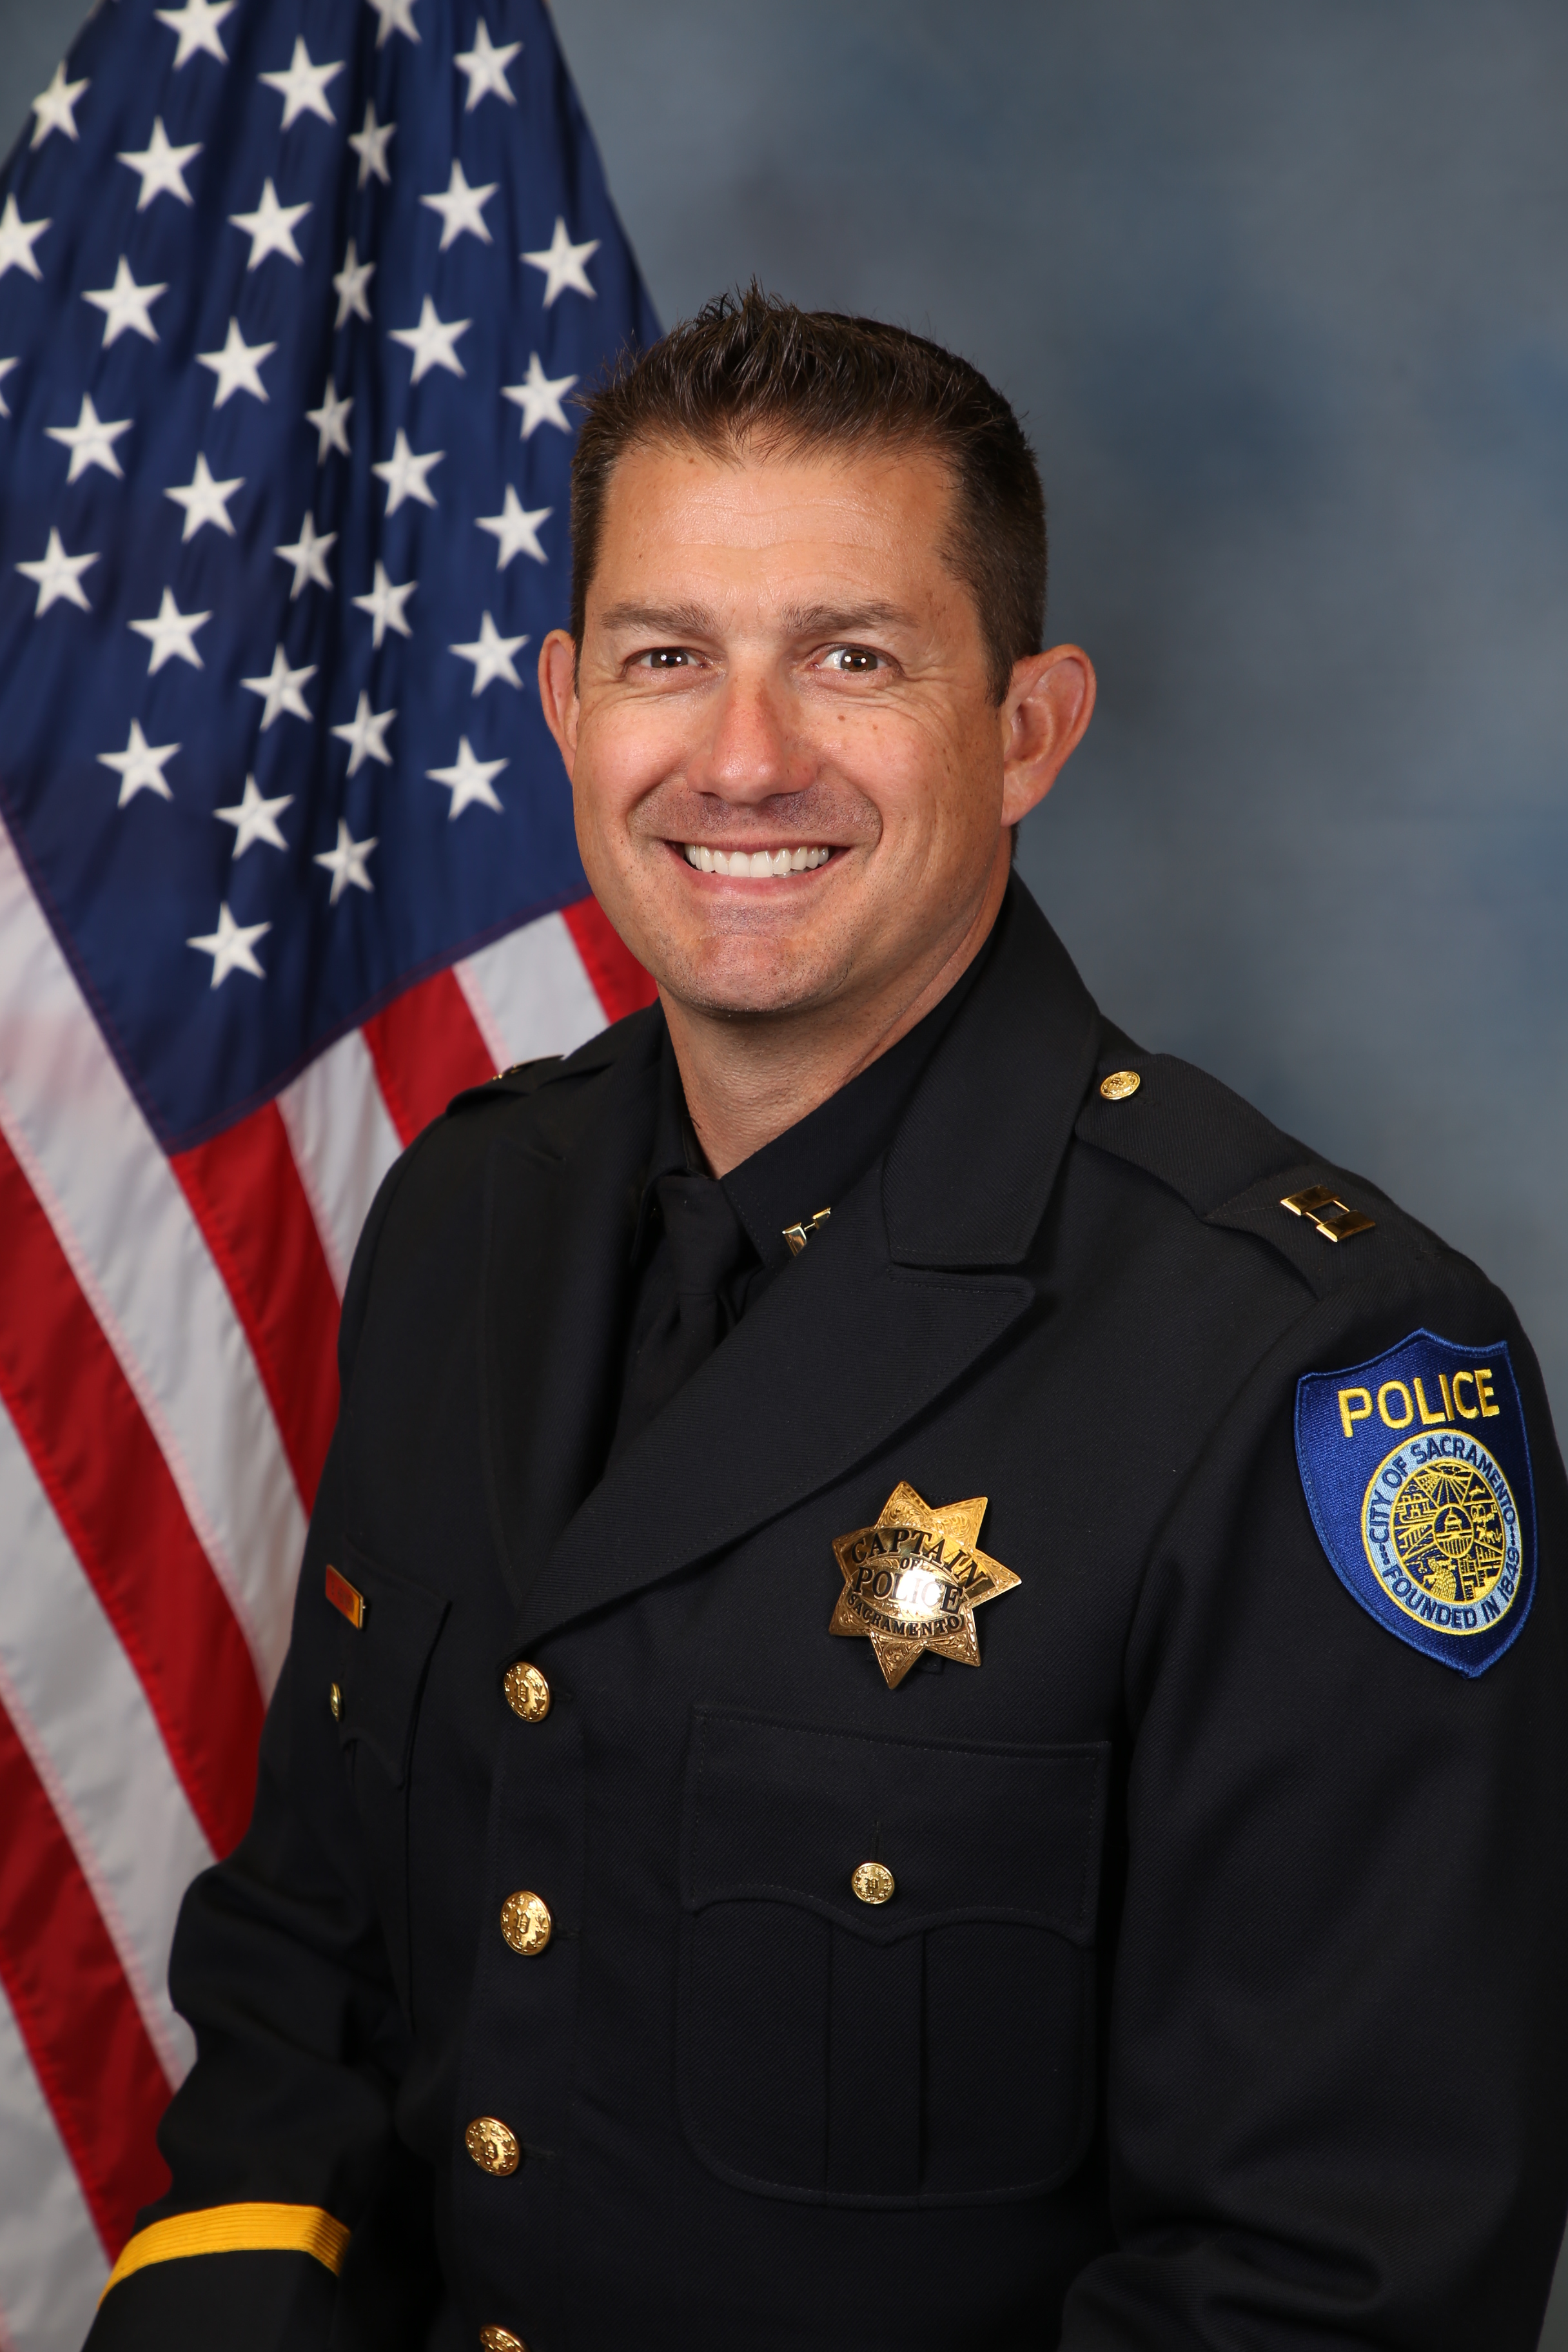 A portrait photo of the Sacramento Police Department Captain Bryce Heinlein, in full class-A uniform